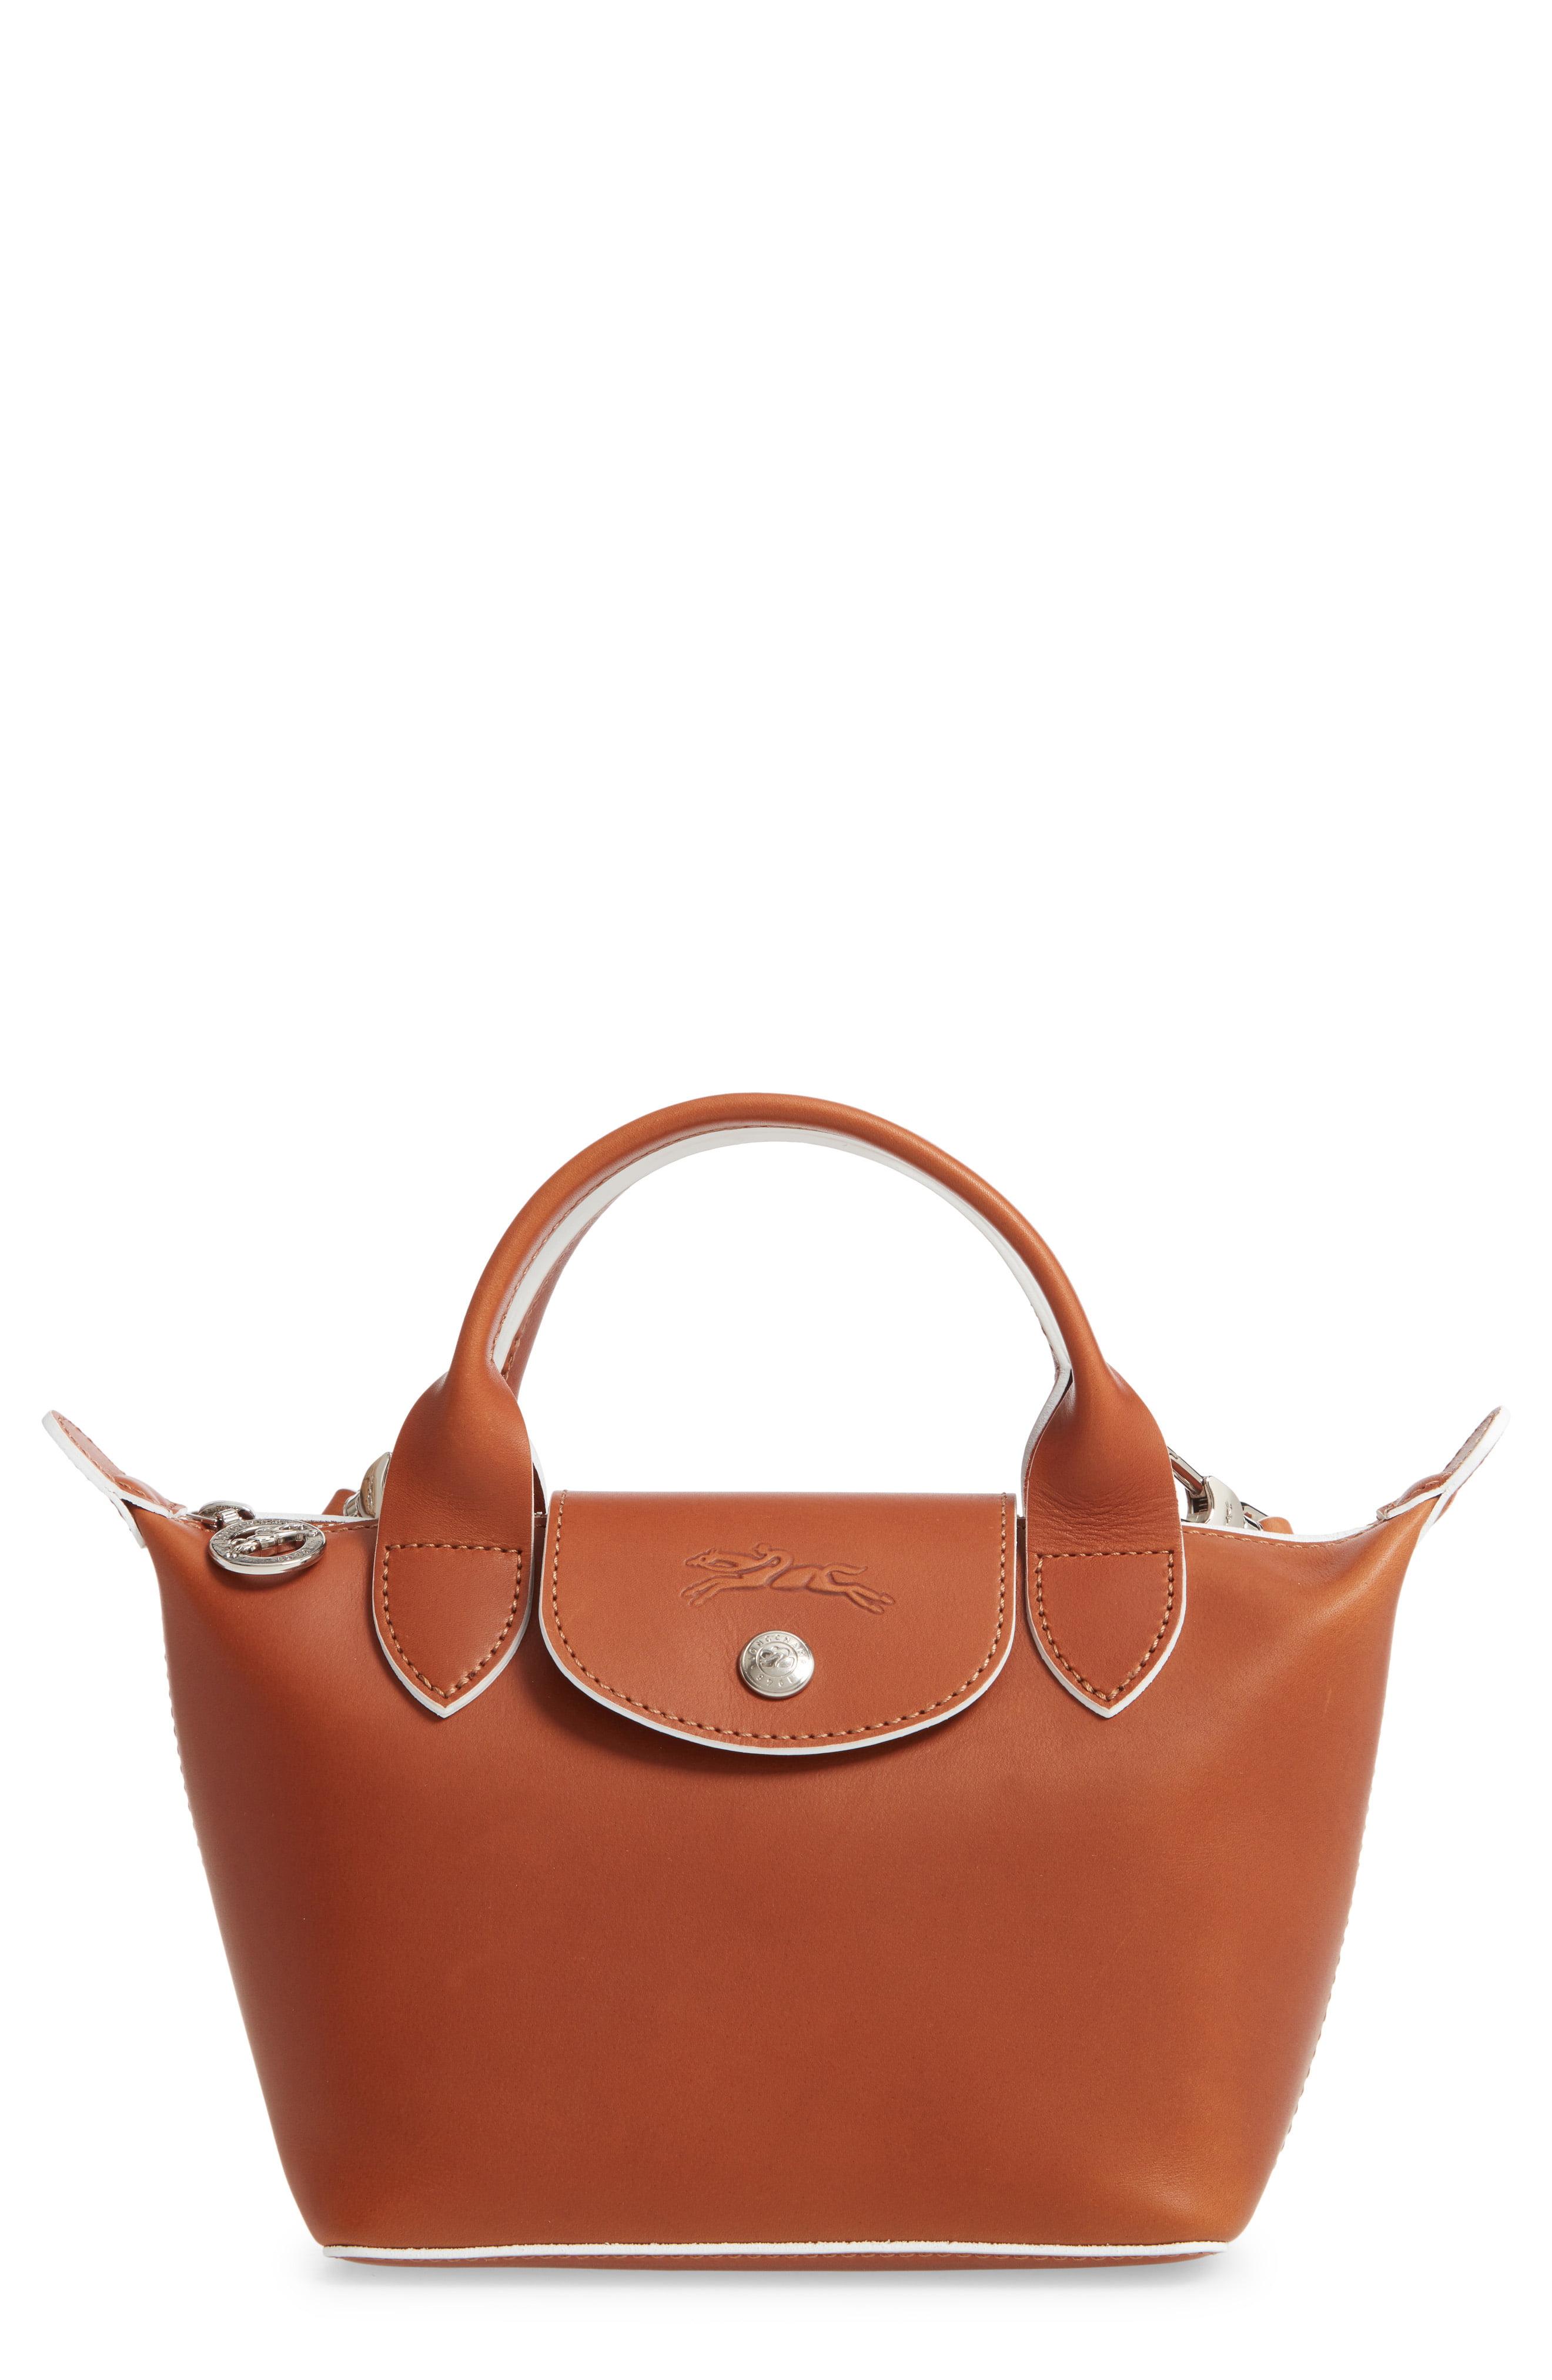 La Pliage Cuir Small Leather Top Handle Bag